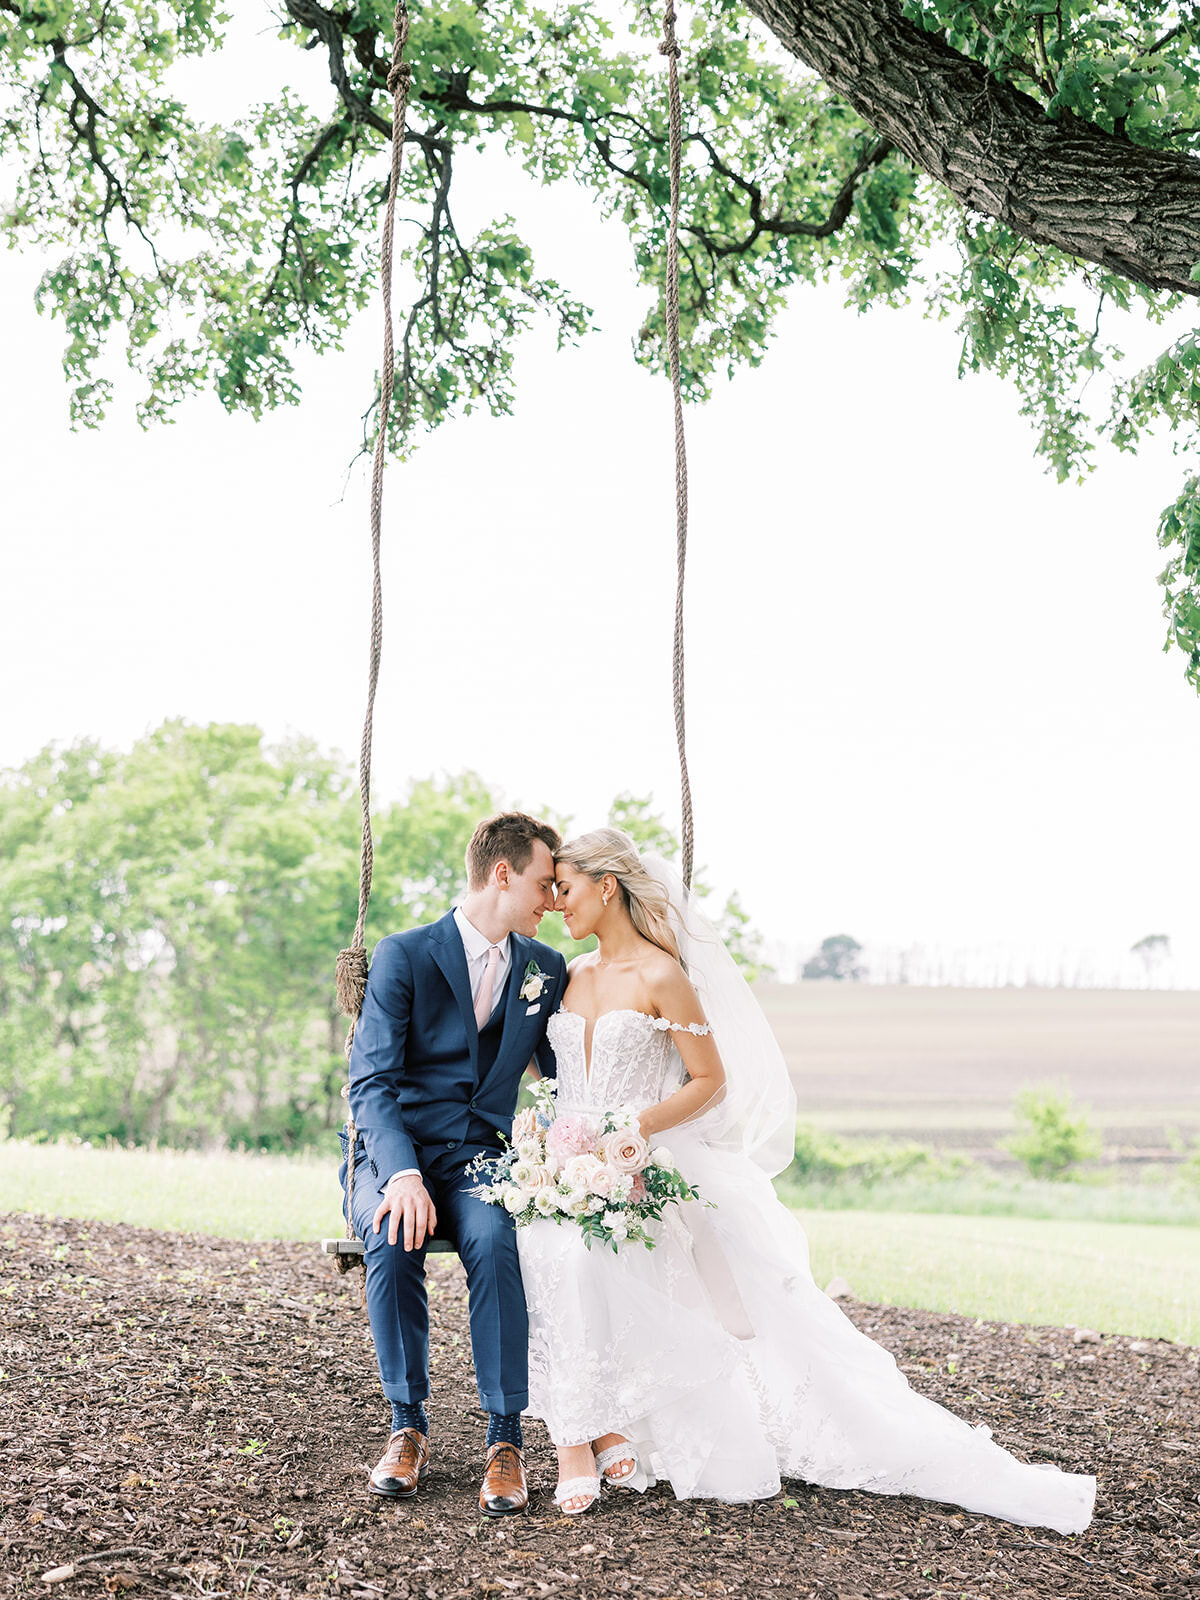 Bride and groom sit on swing under large oak tree